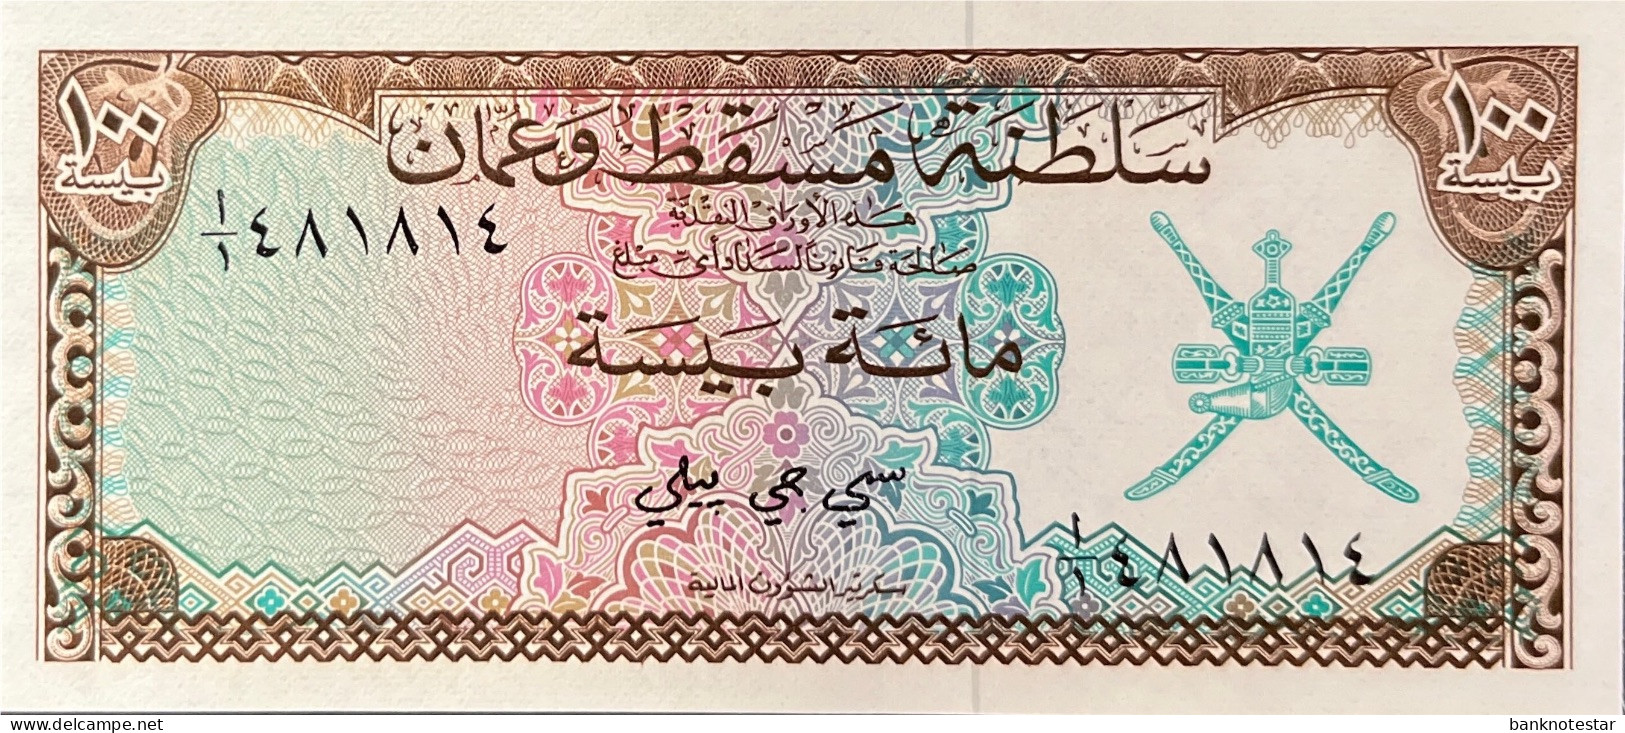 Oman 100 Baiza, P-1 (1970) - UNC - Oman